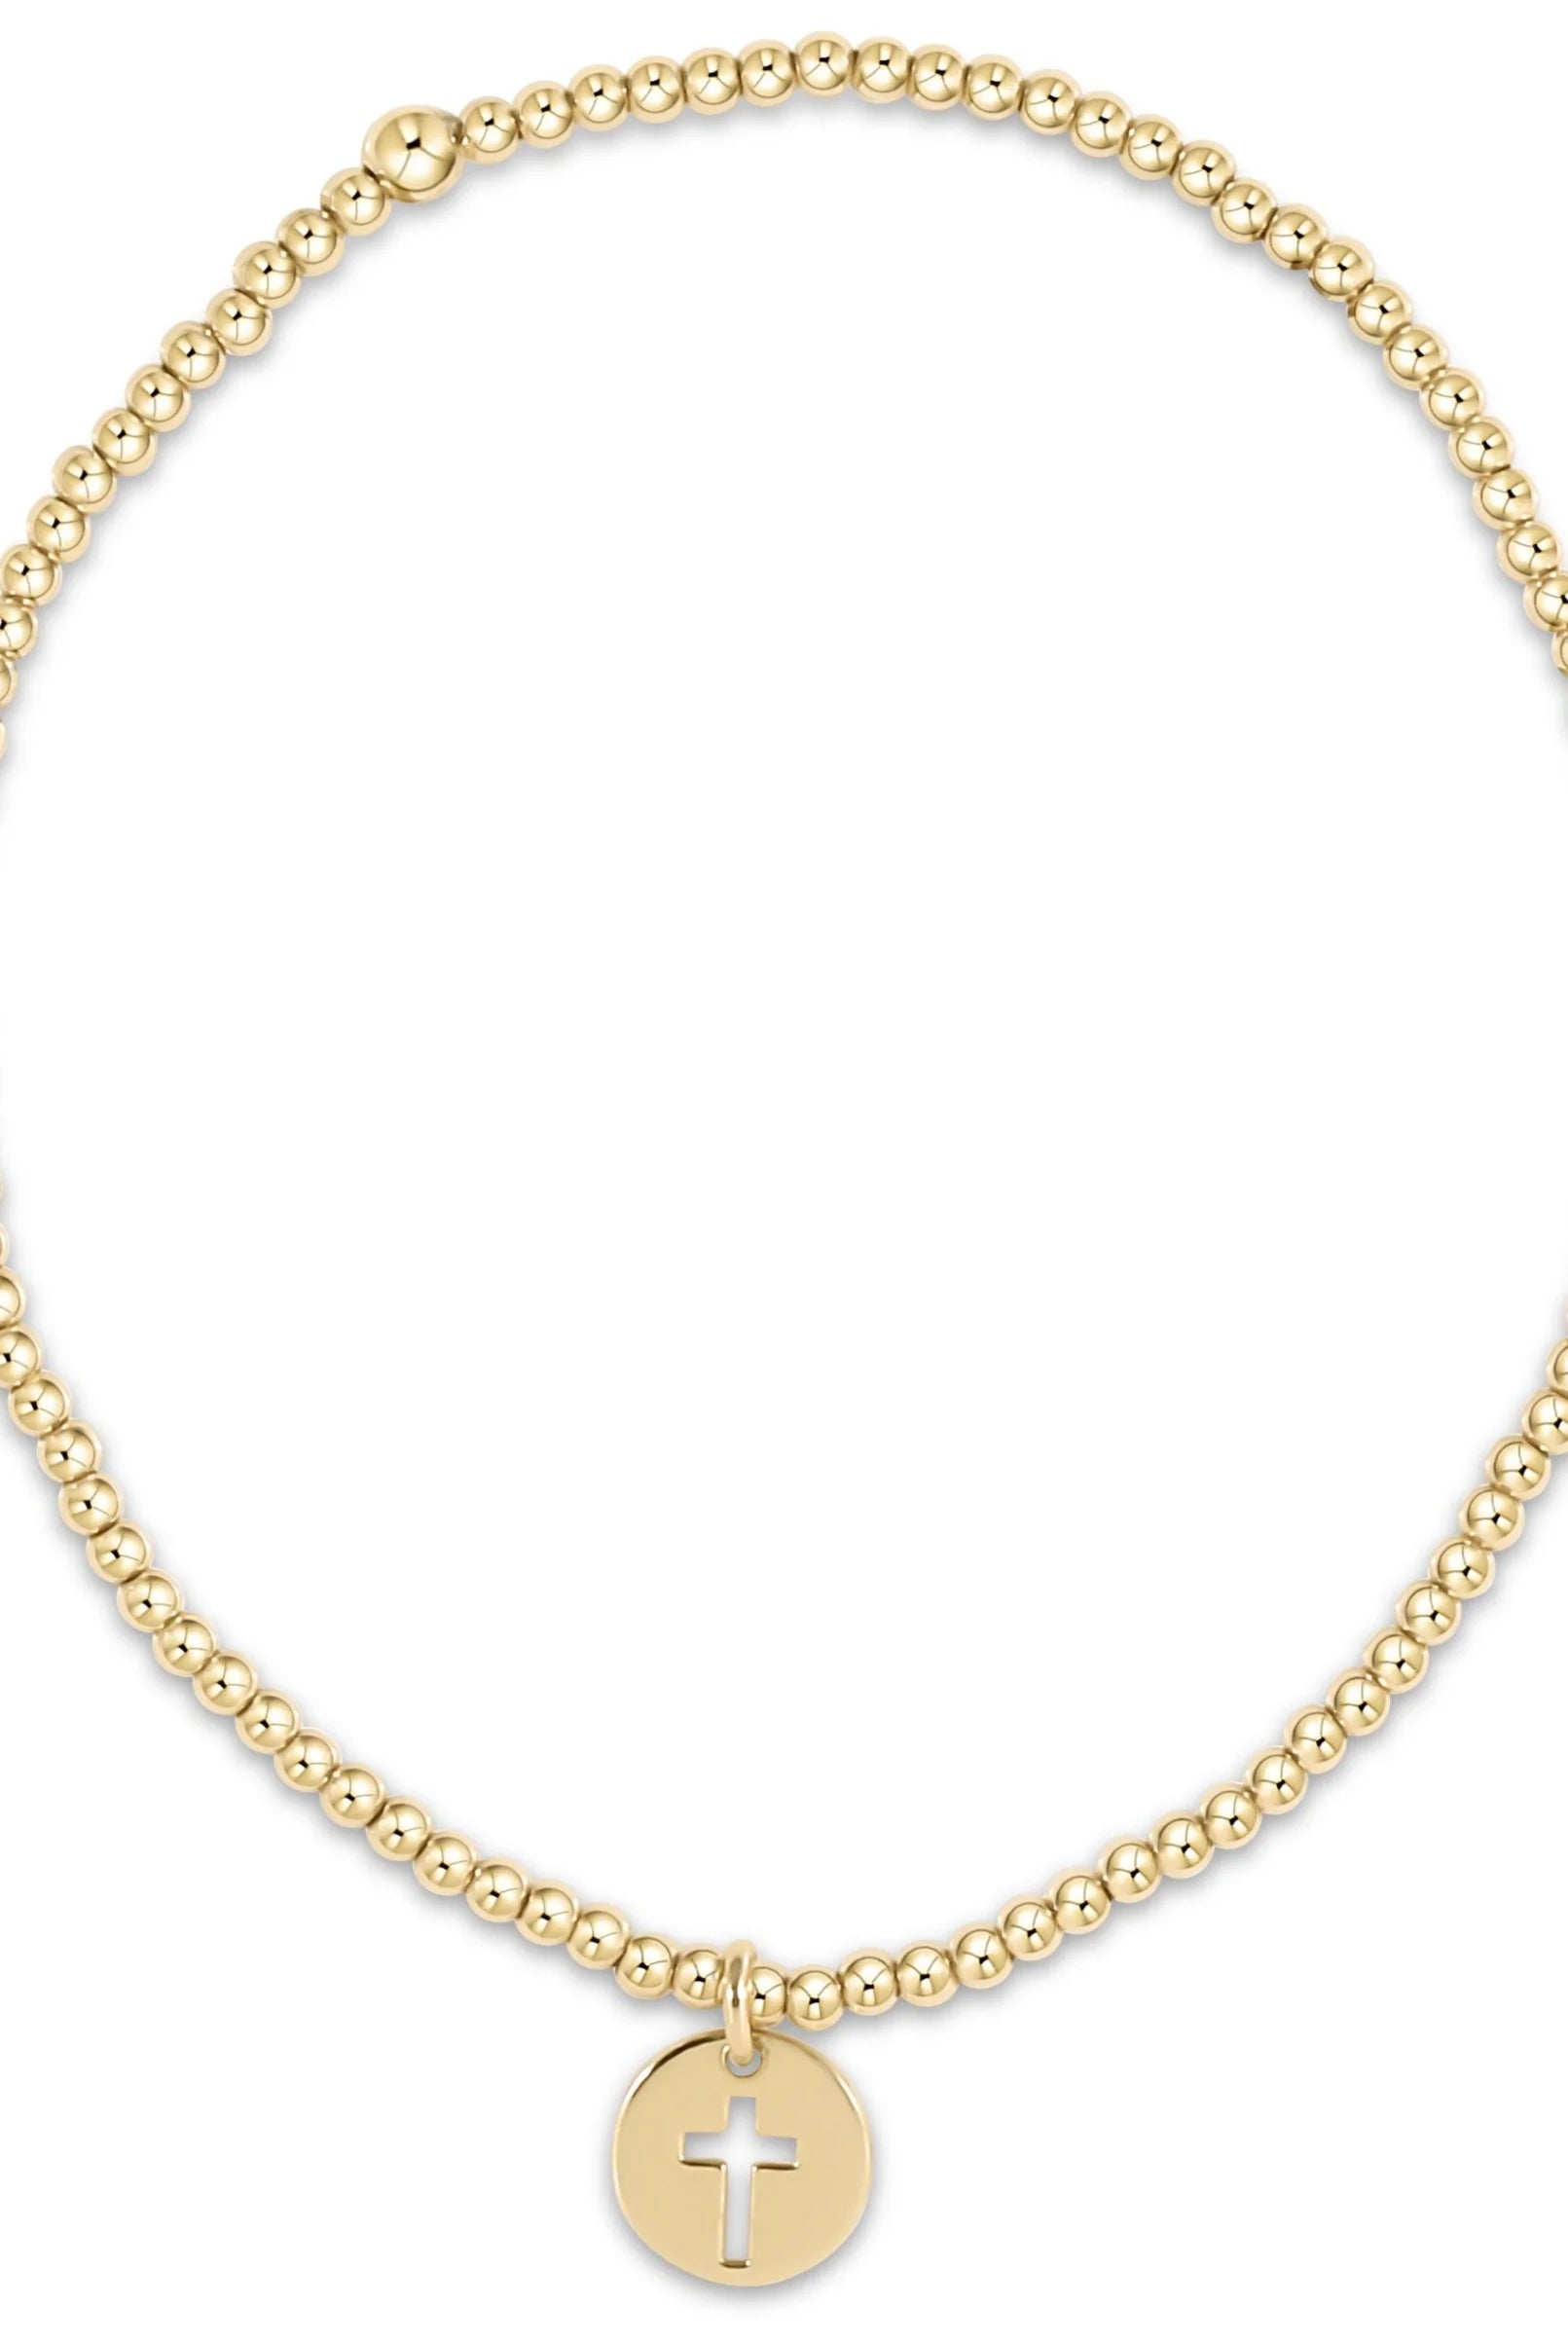 Blessed Small Gold Charm Bracelet-260 eNewton-eNewton-The Lovely Closet, Women's Fashion Boutique in Alexandria, KY